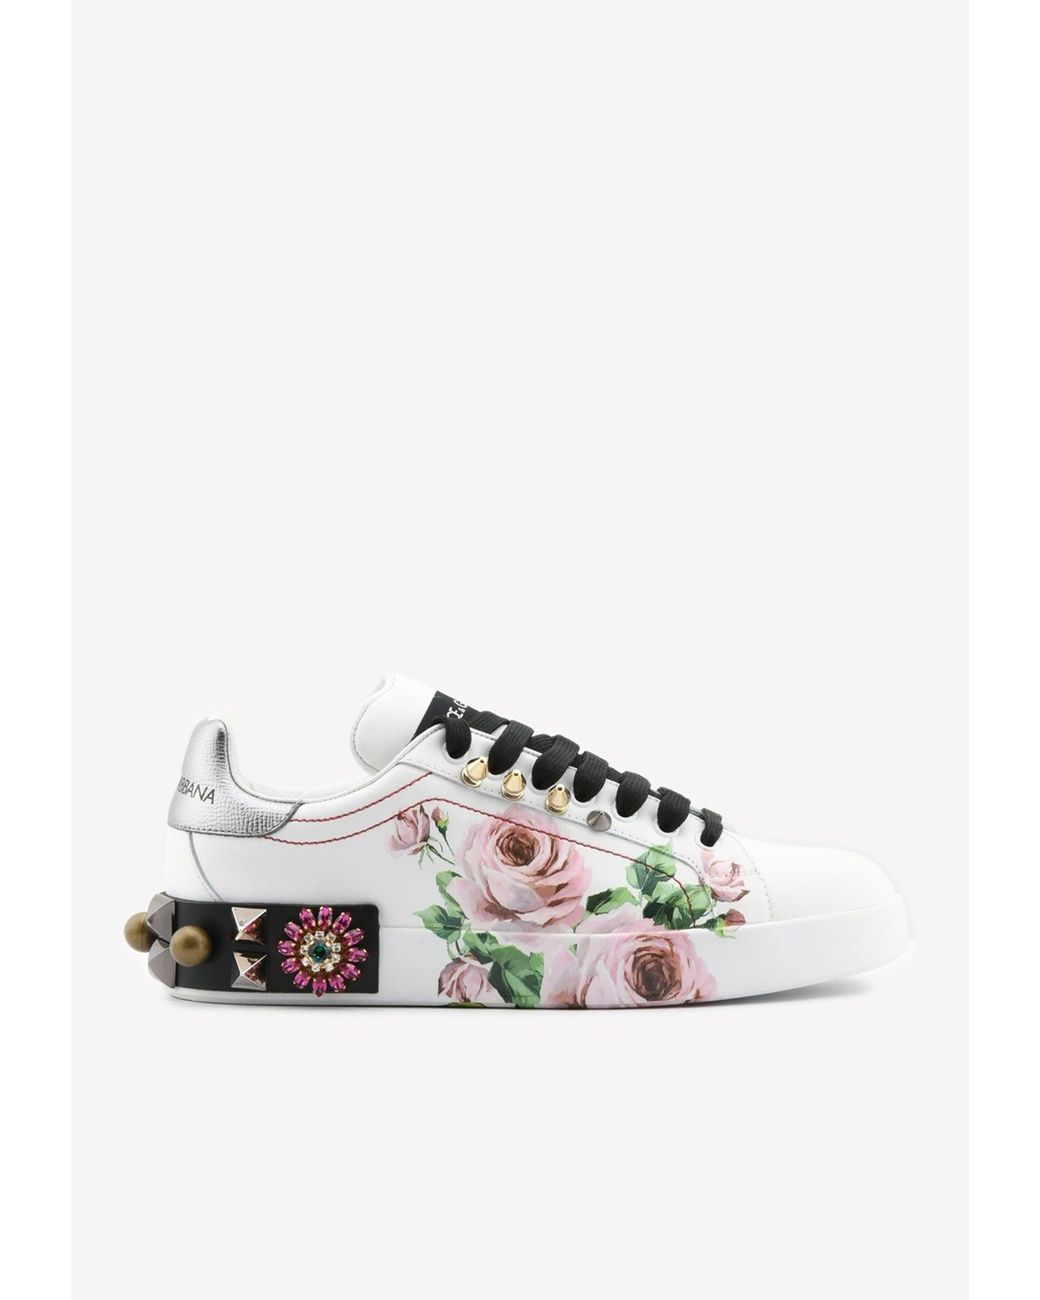 Dolce & Gabbana Portofino Rose Print Embellished Sneakers in White | Lyst